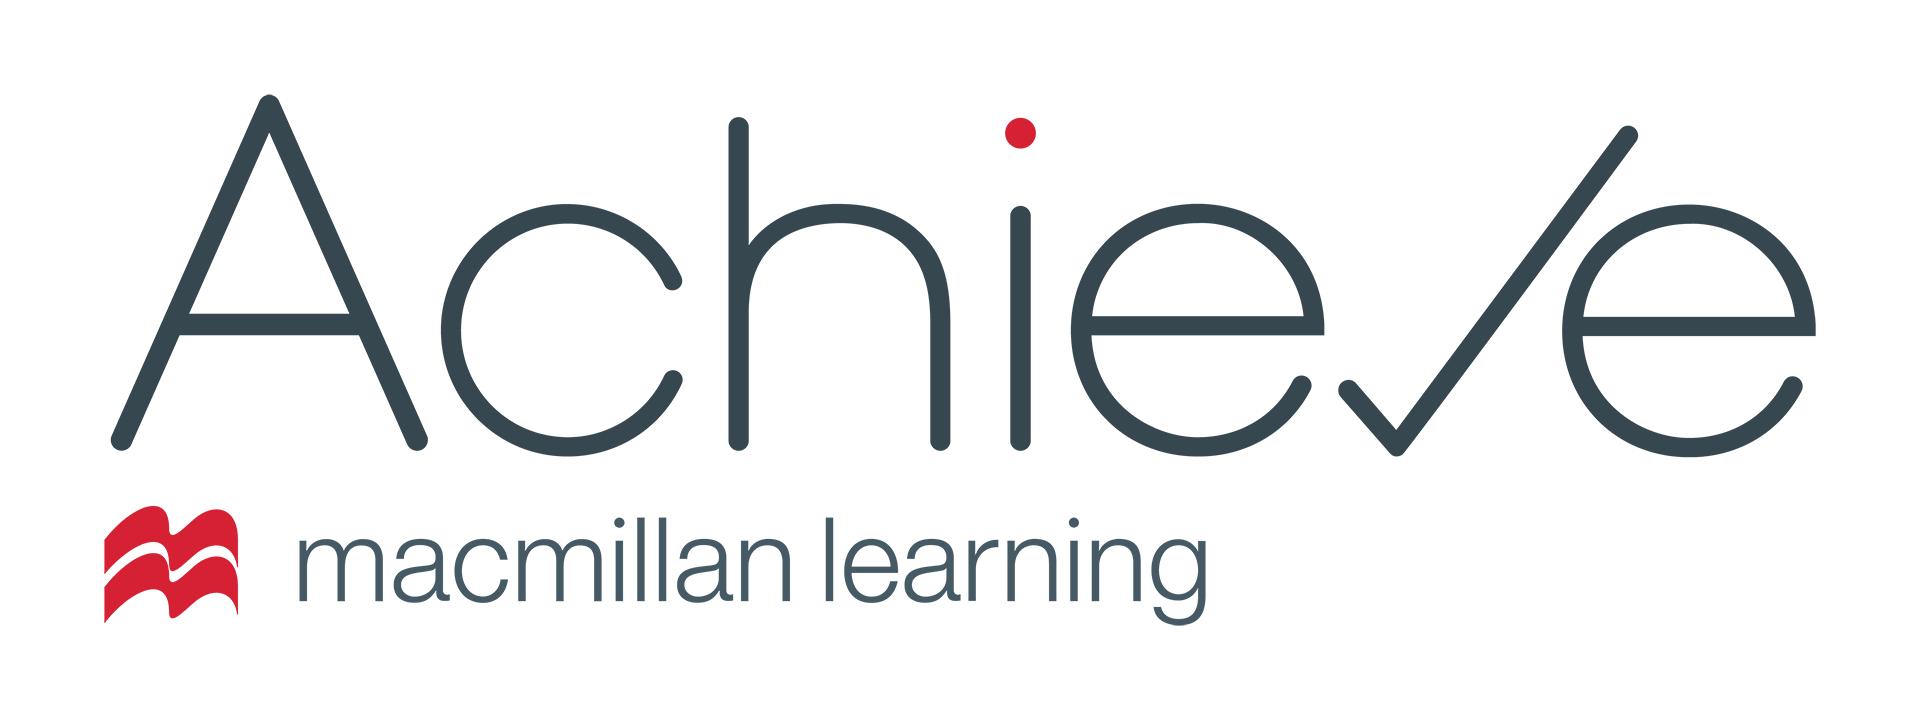 macmillanlearning-achieve-logo